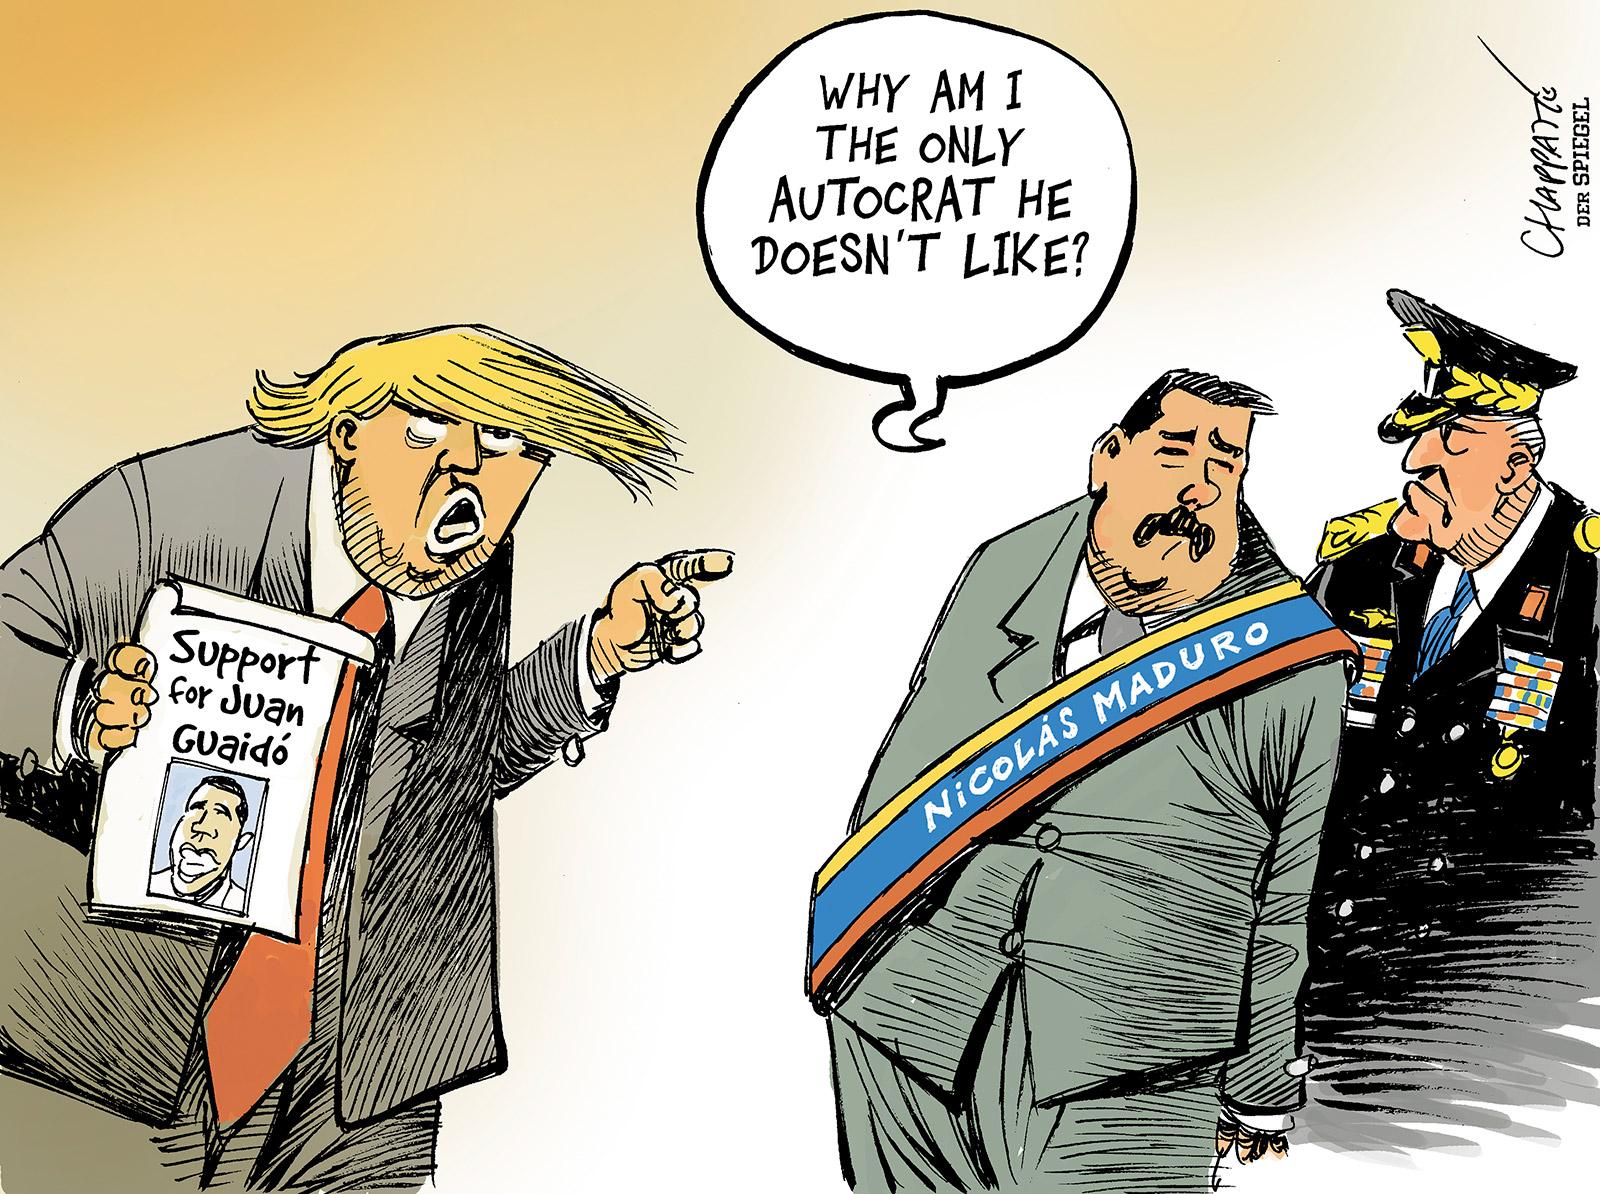 Maduro and Trump